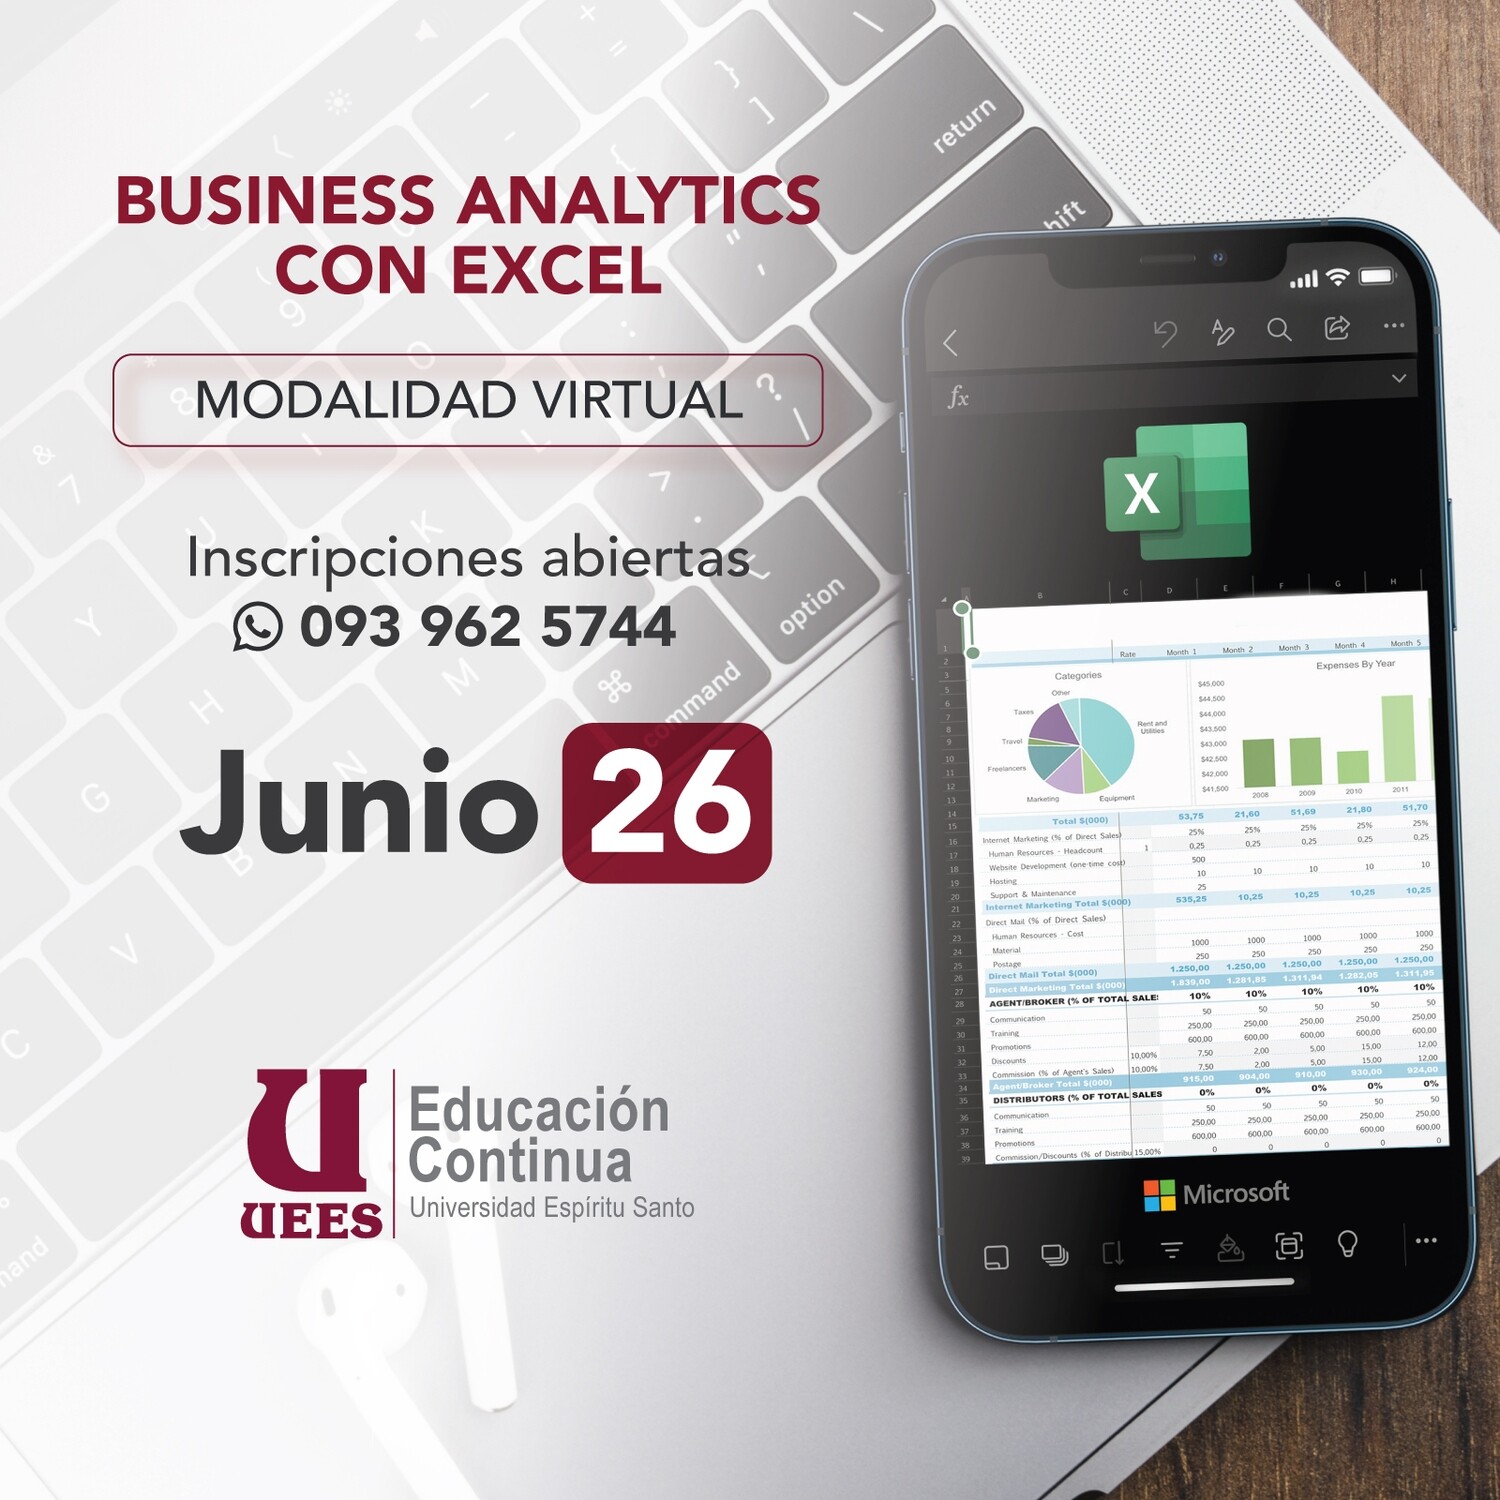 Business Analytics con Excel